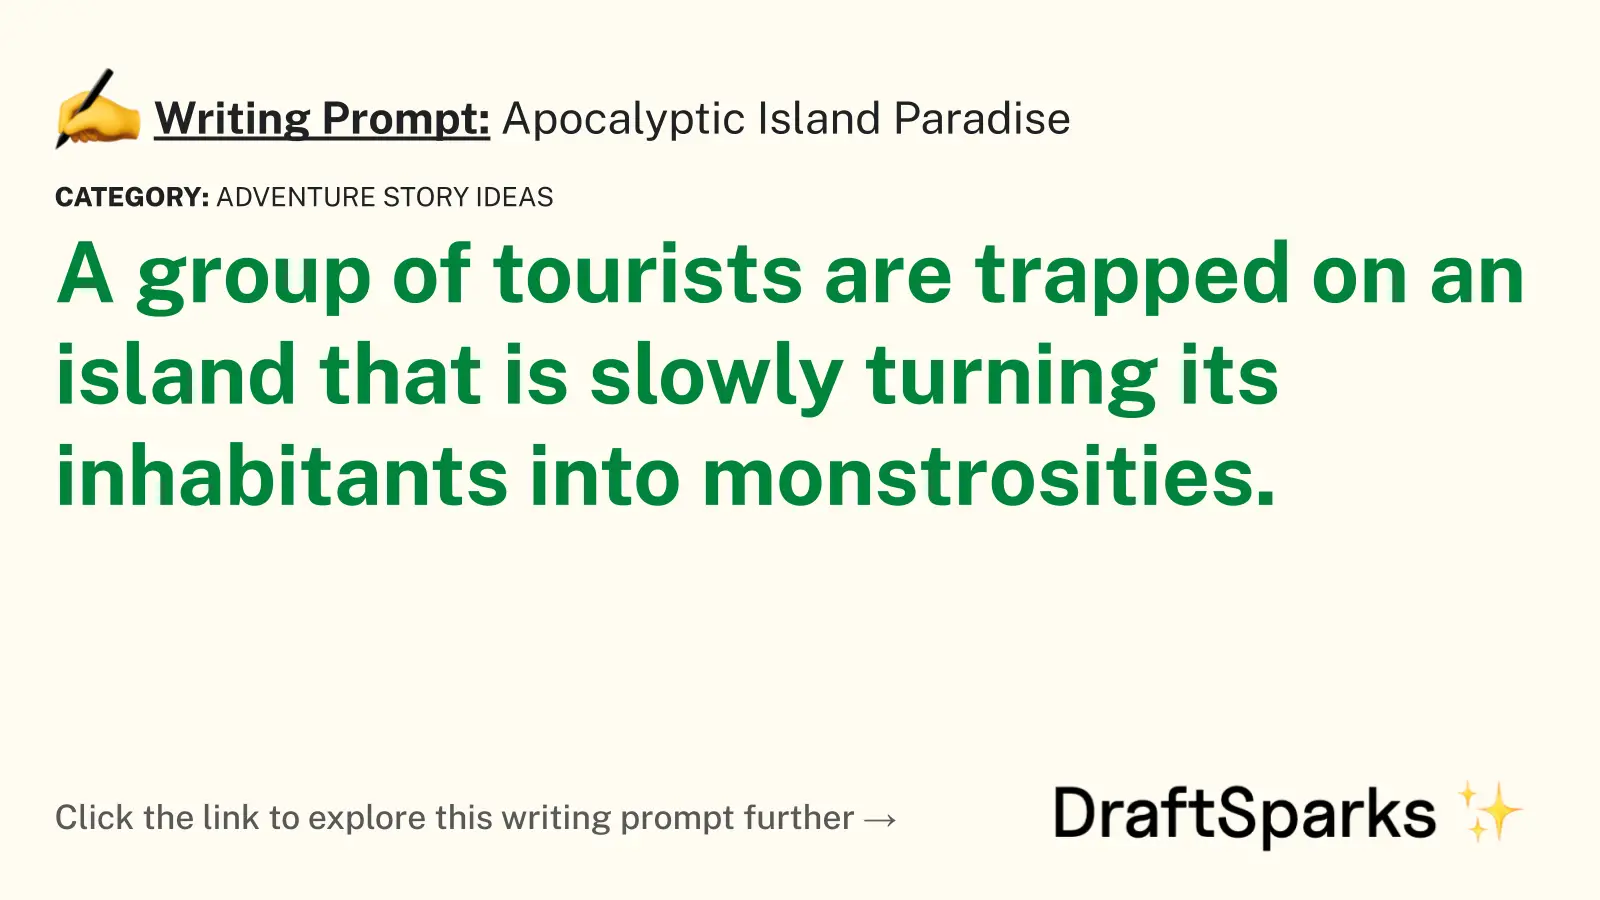 Apocalyptic Island Paradise